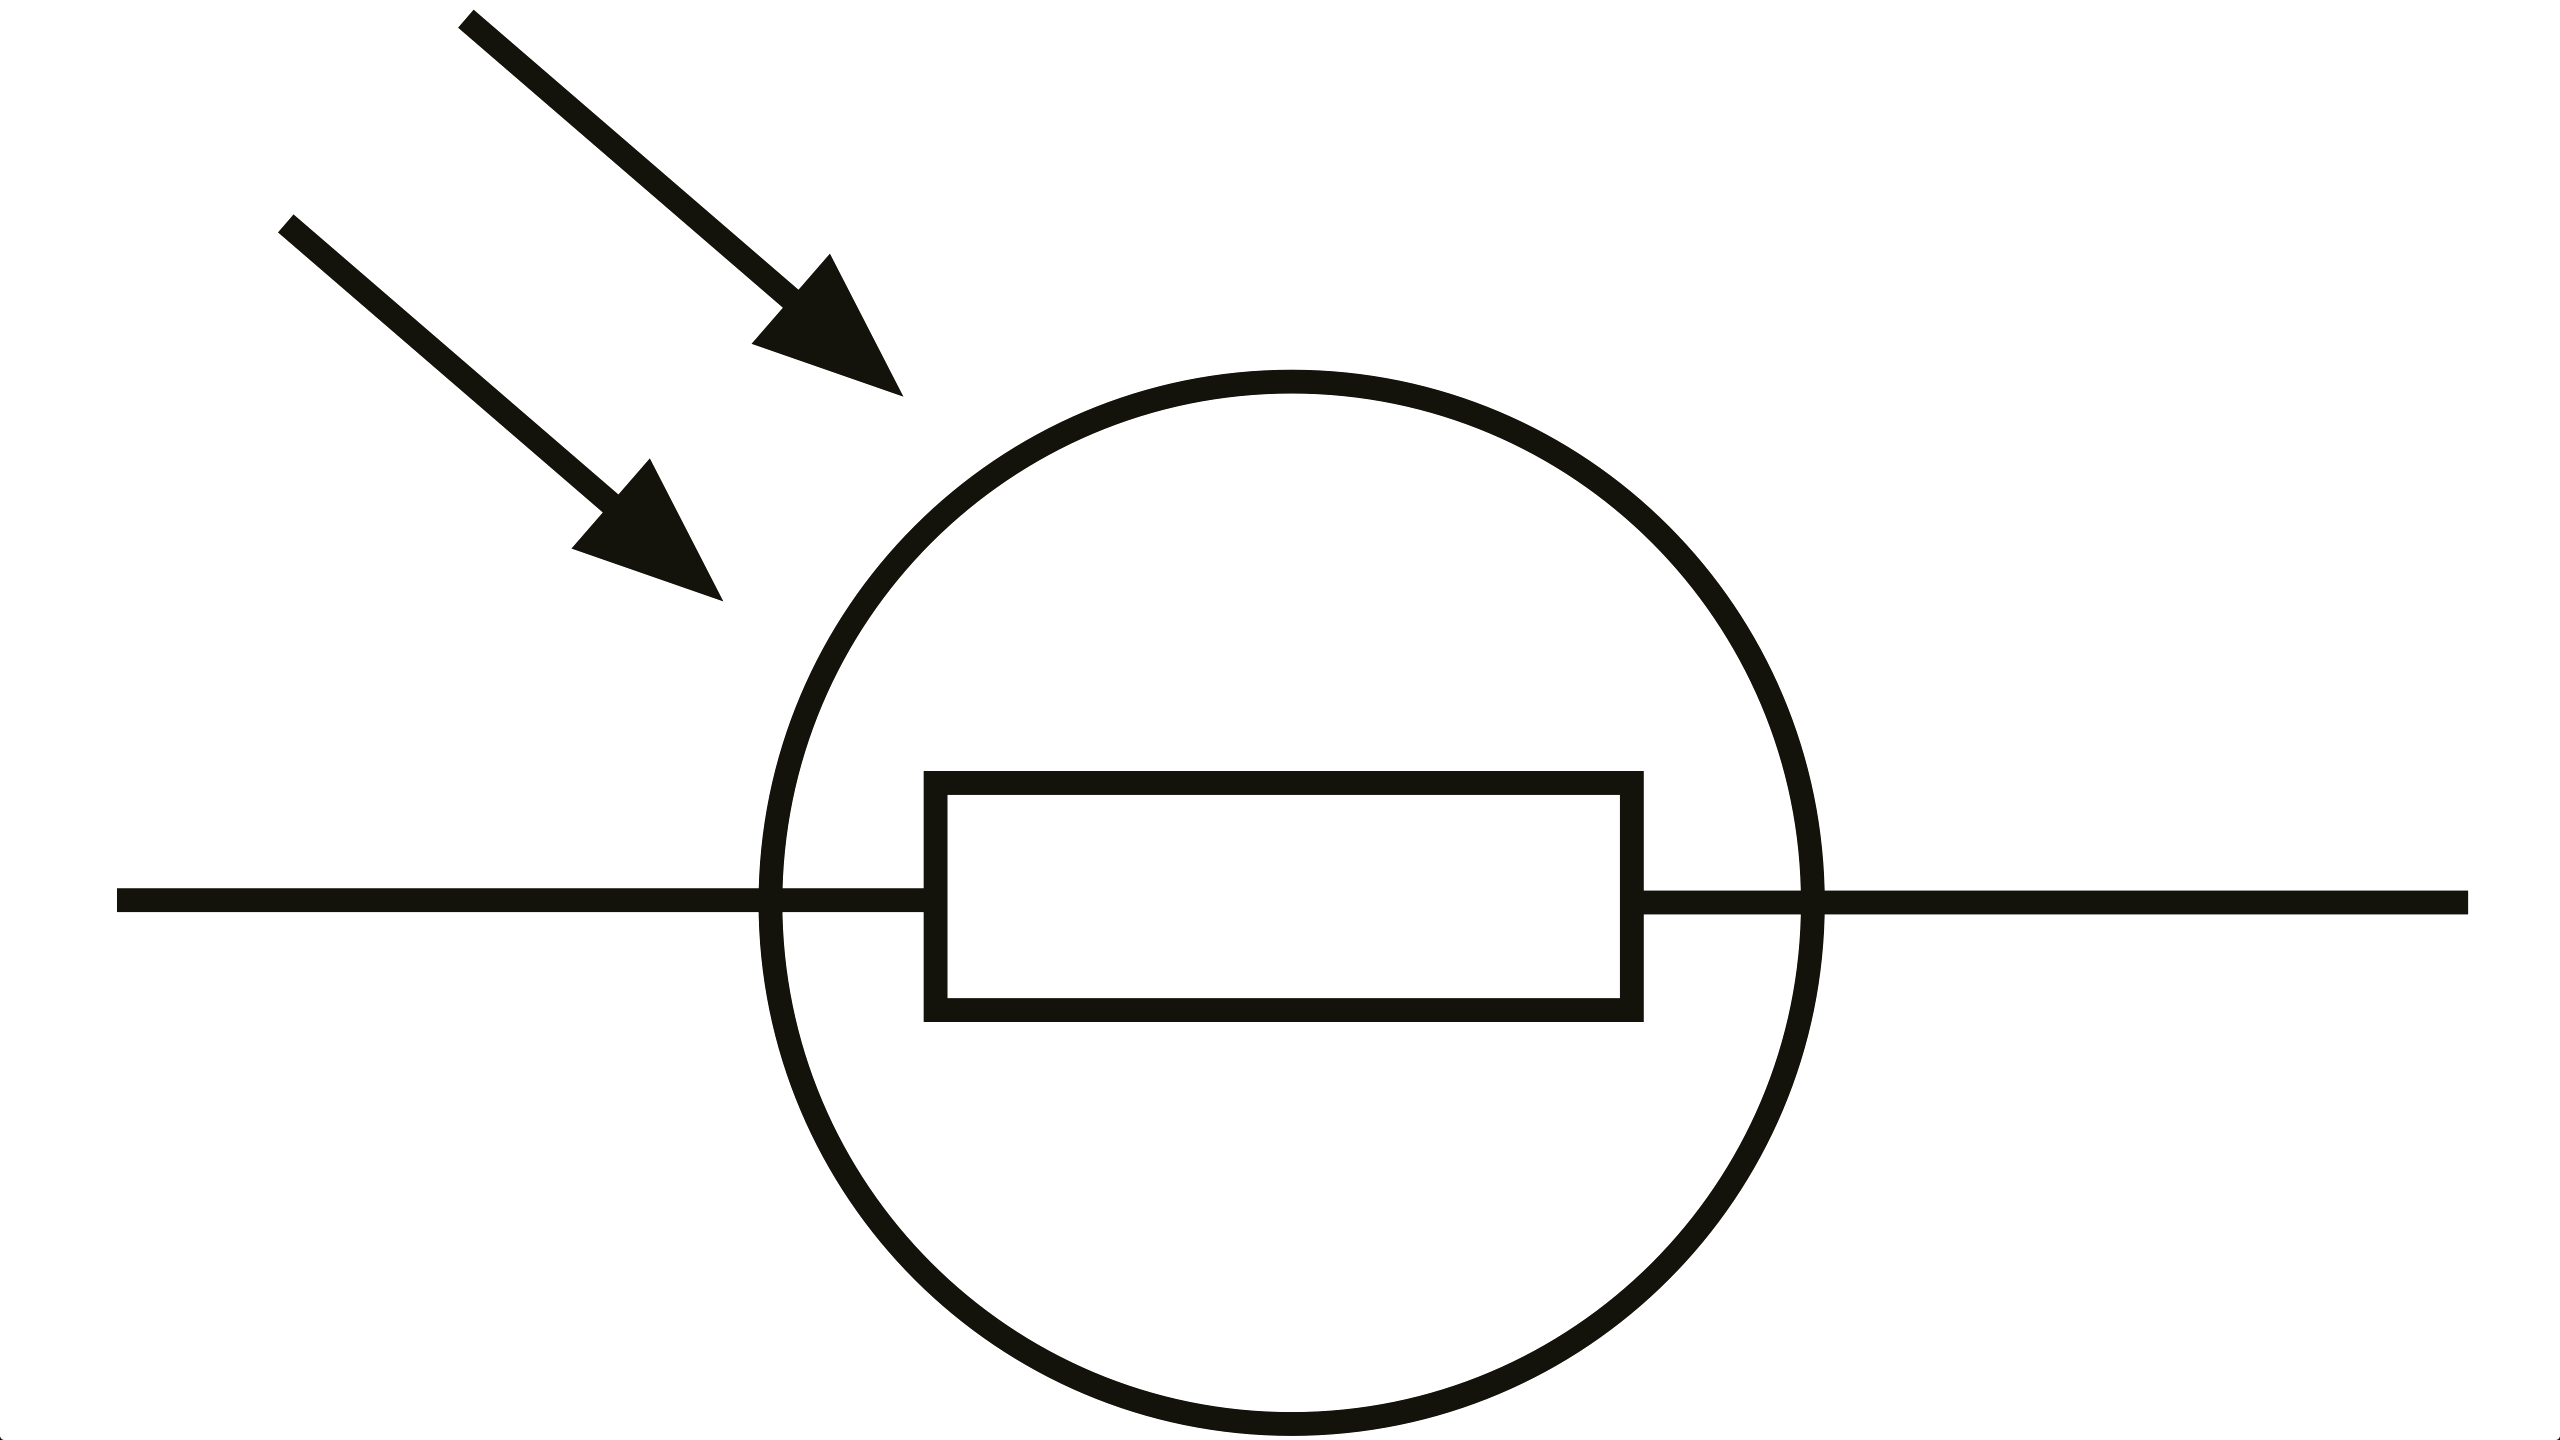 Component. symbol resistor: Resistor And Led Symbol Clipart Best ...